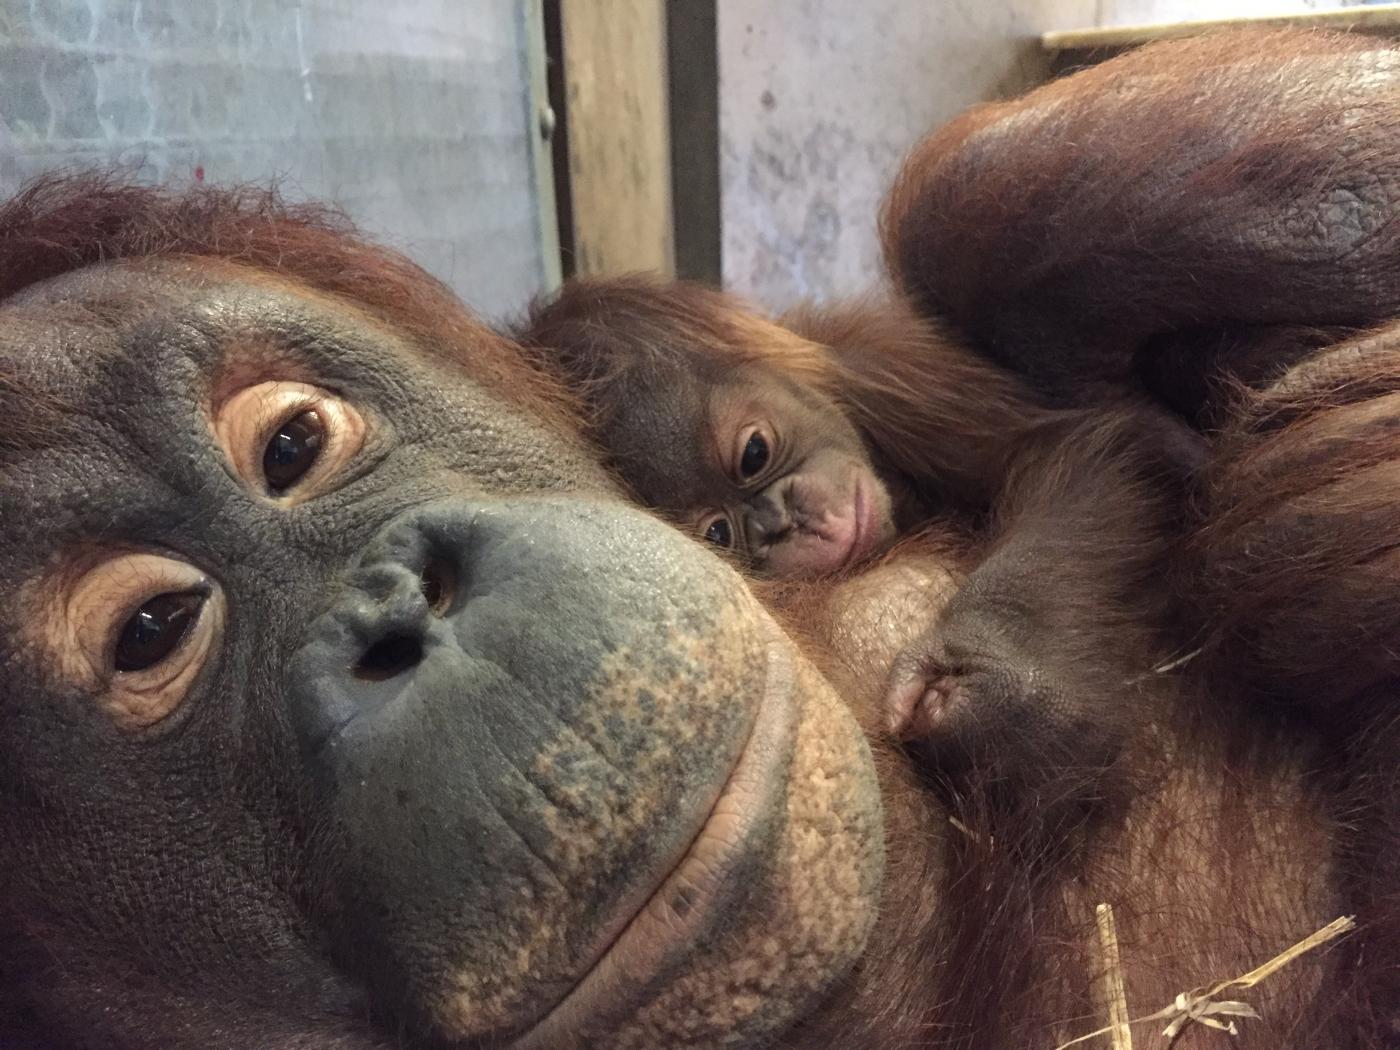 Batang and her baby Redd, a Bornean orangutan born on Sept. 12. (Courtesy 